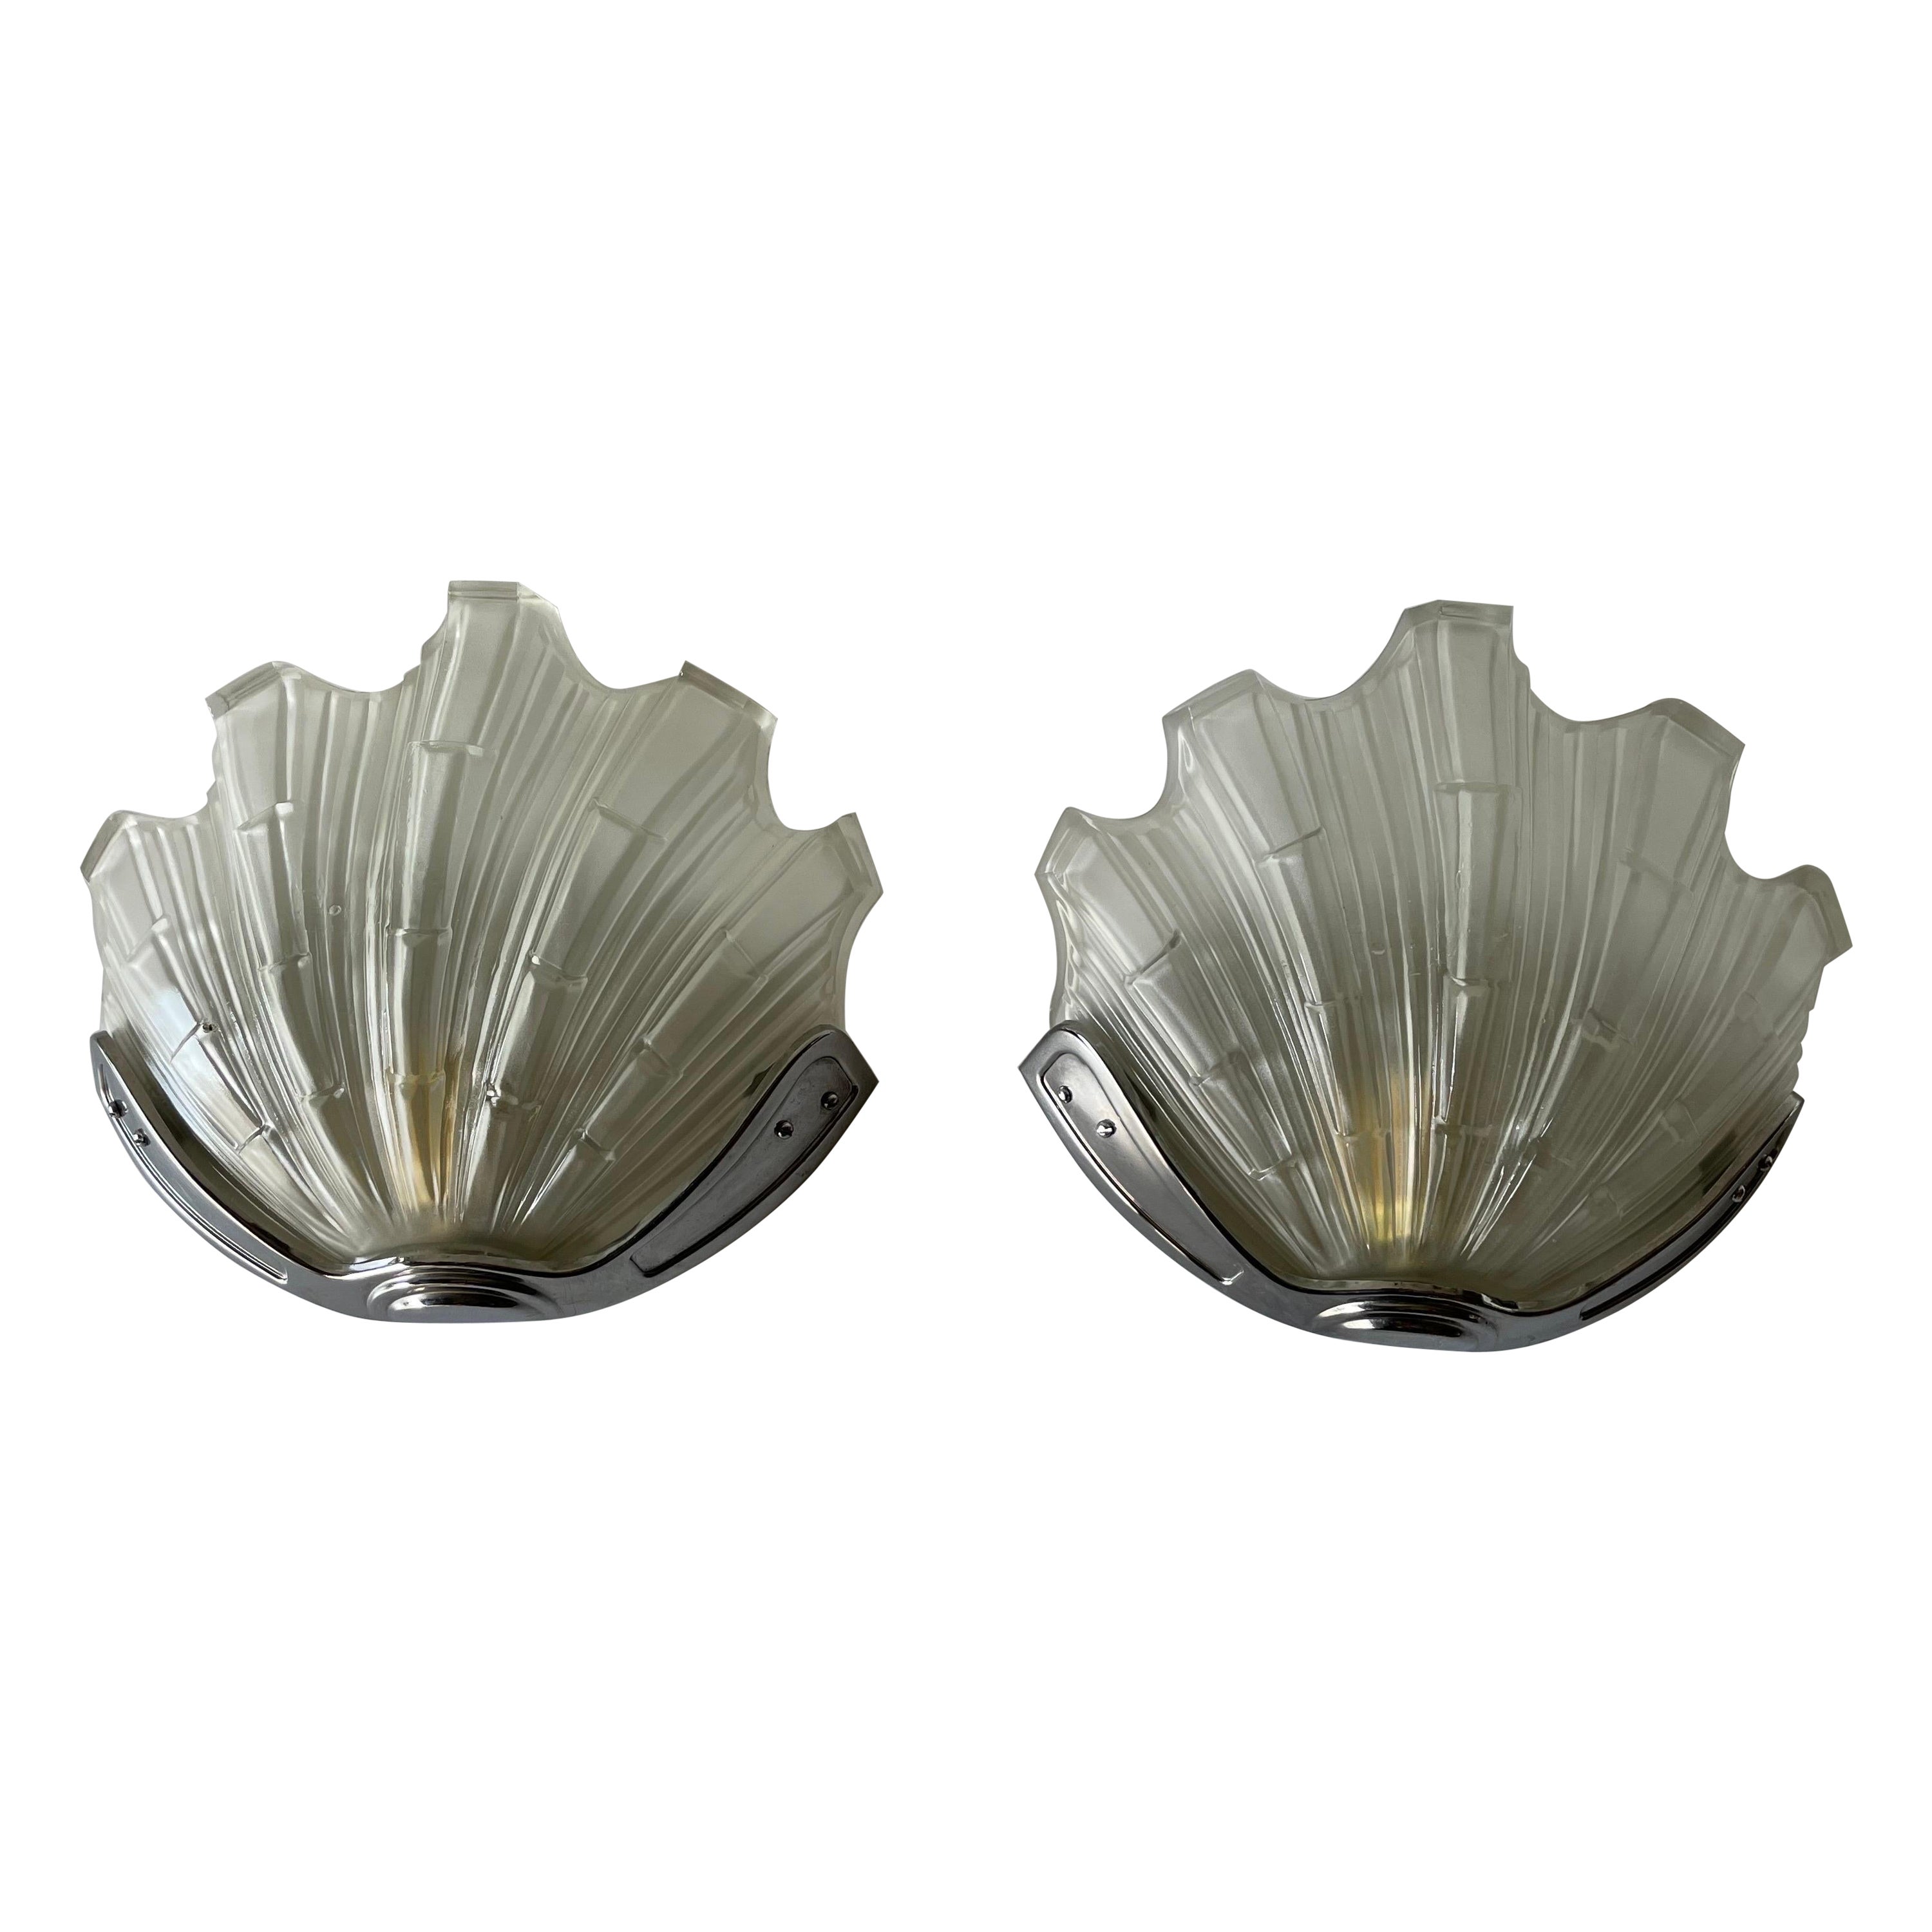 Art Deco Stil Shell Design Pair of Sconces, 1960s, Germany For Sale